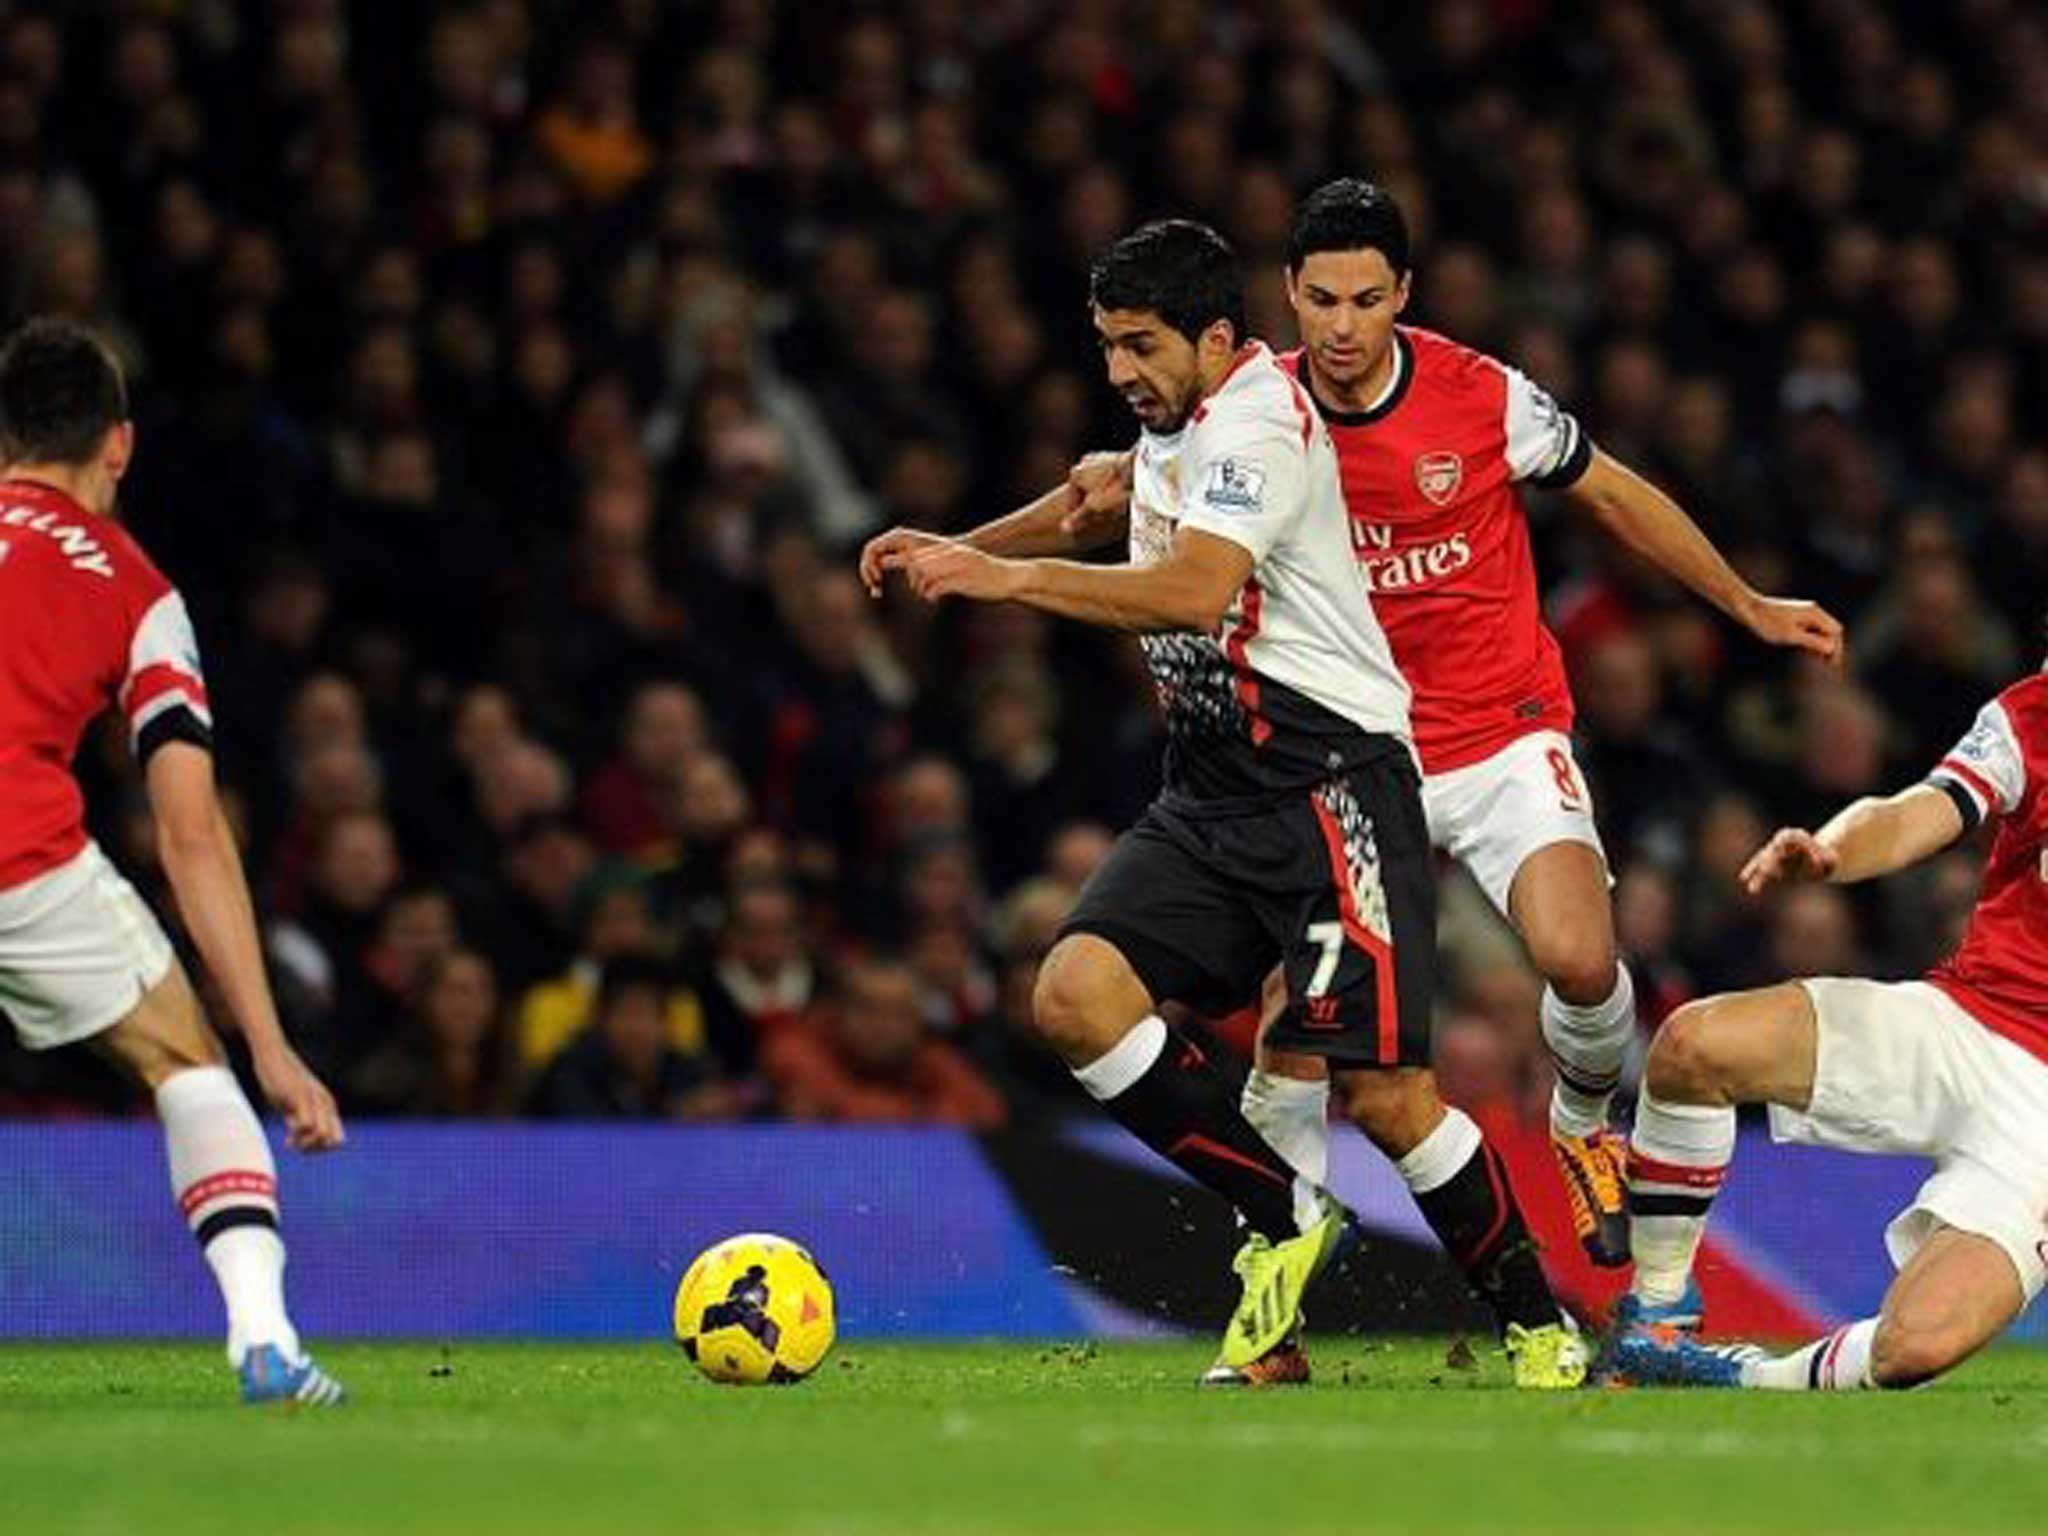 Target man: Luis Suarez of Liverpool tangles with Arsenal’s Mikel Arteta